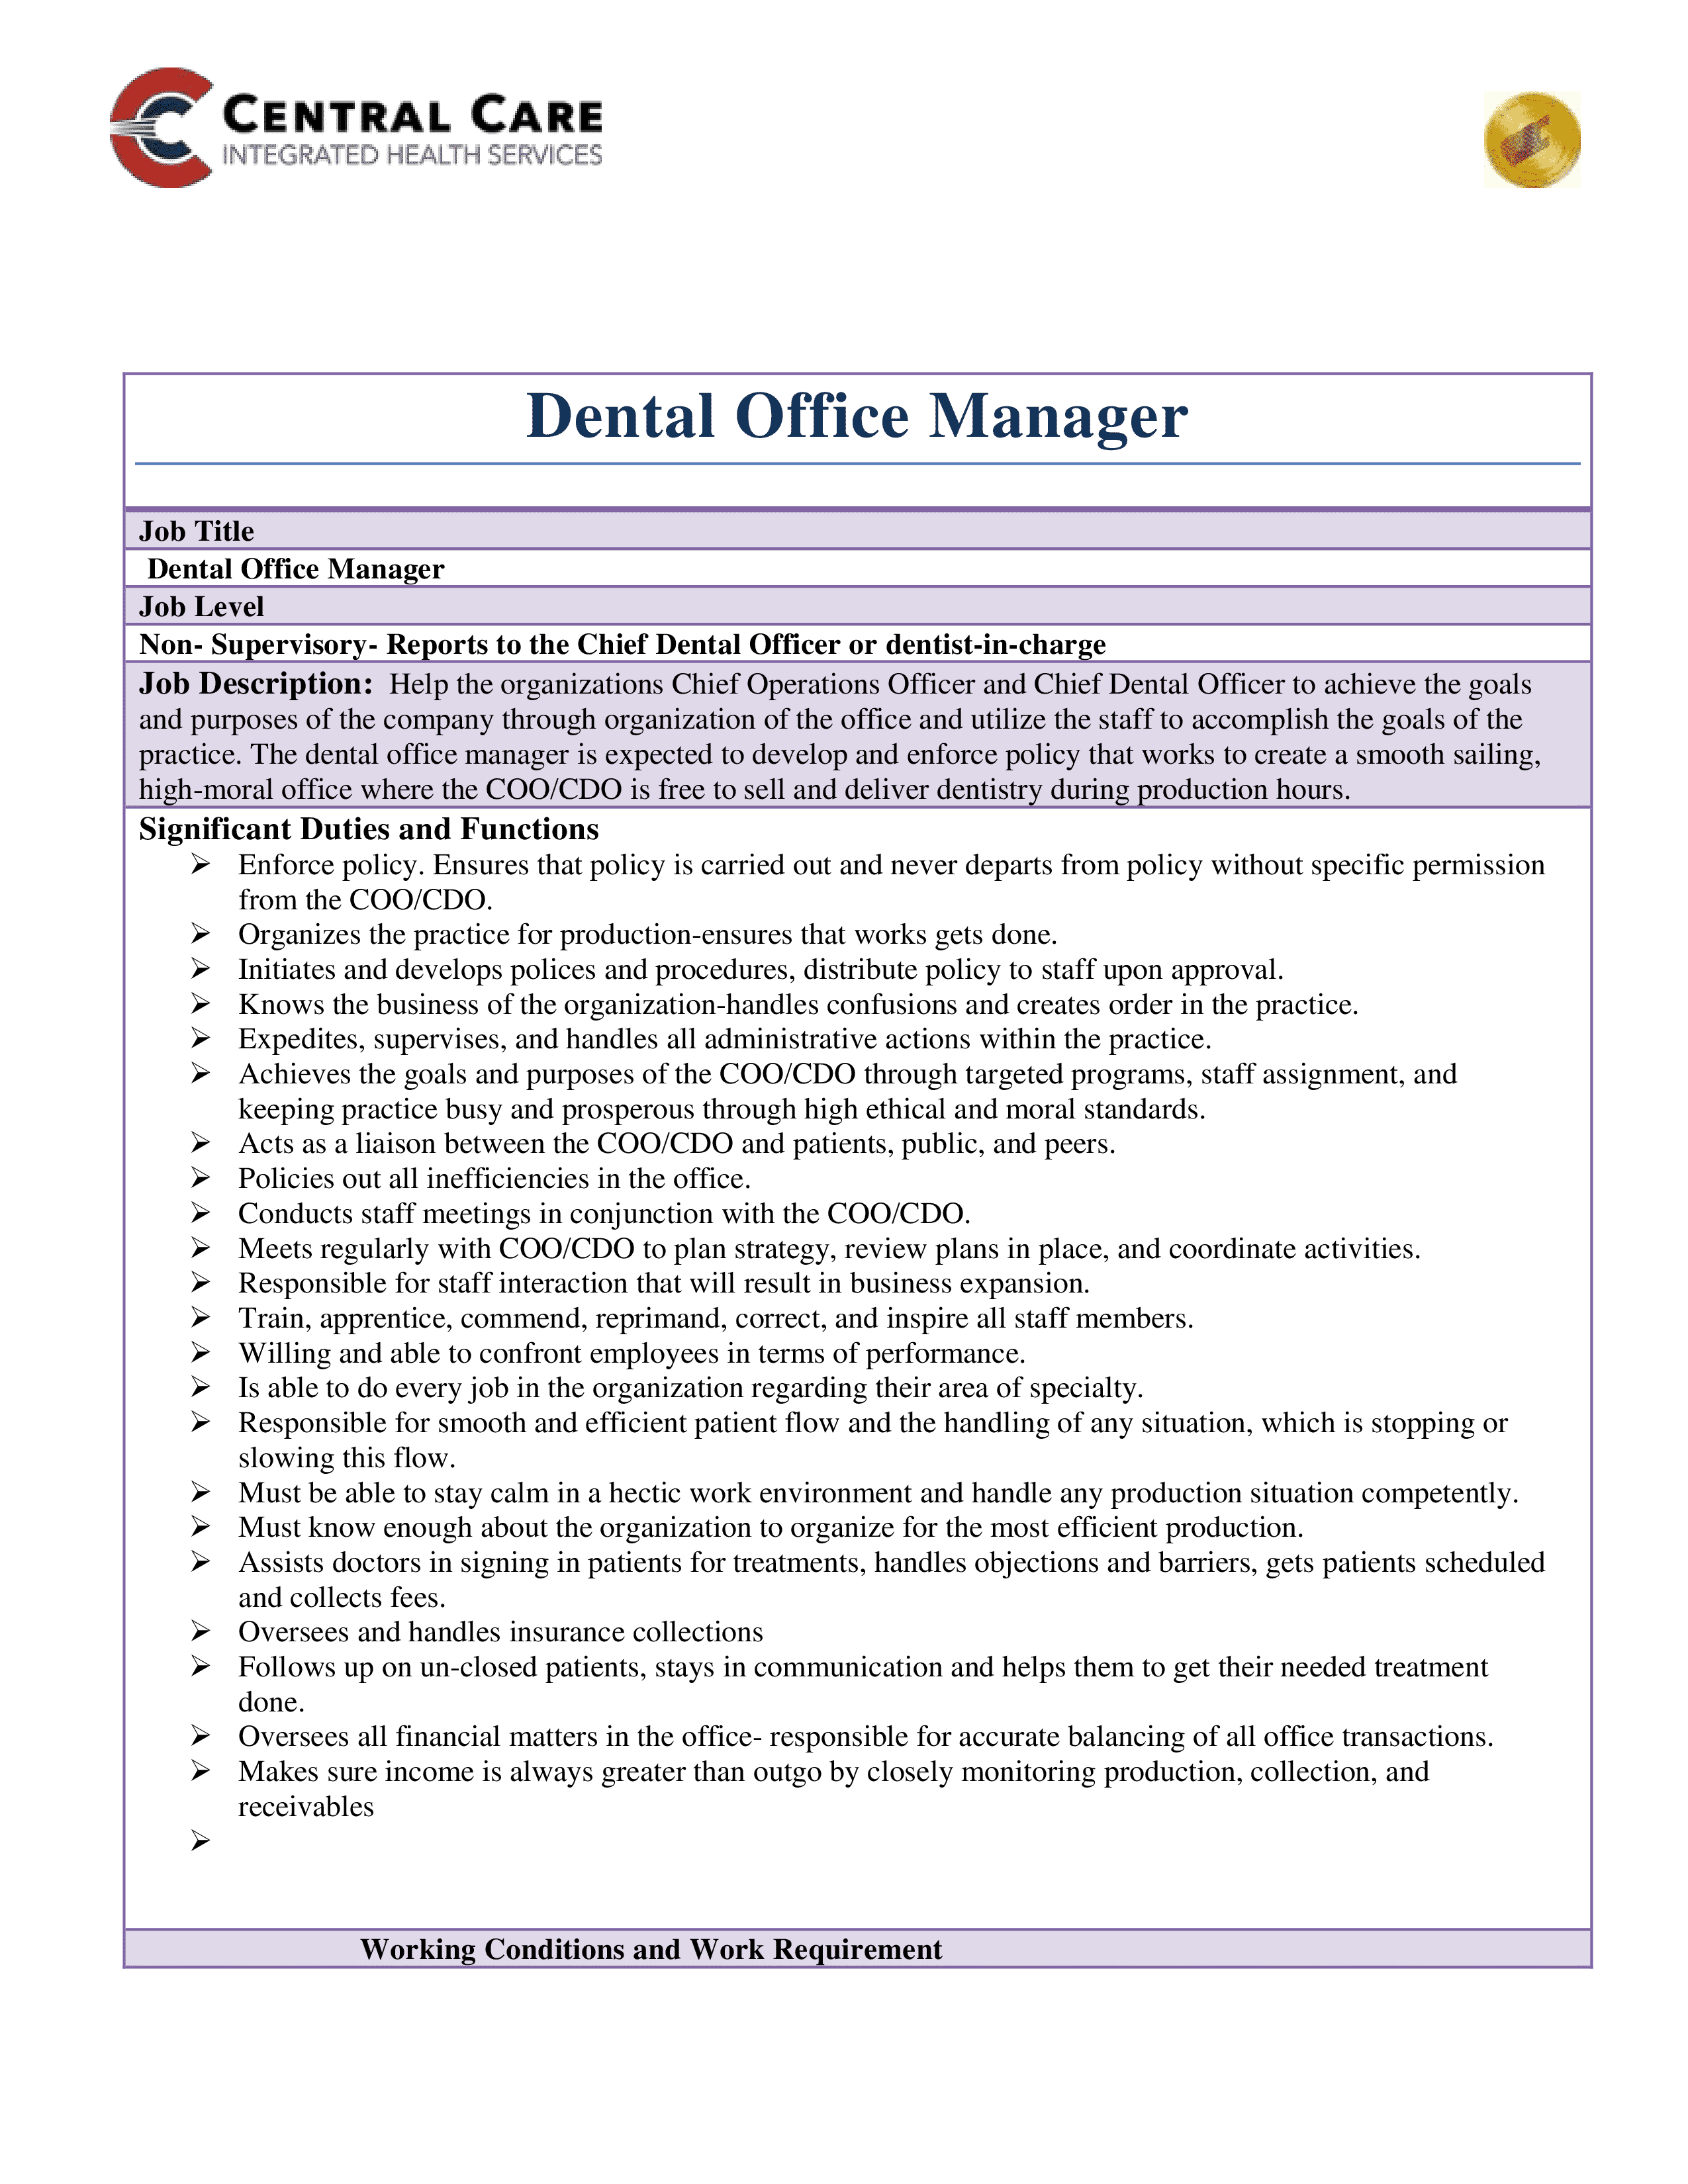 dental-office-manager-job-responsibilities-2